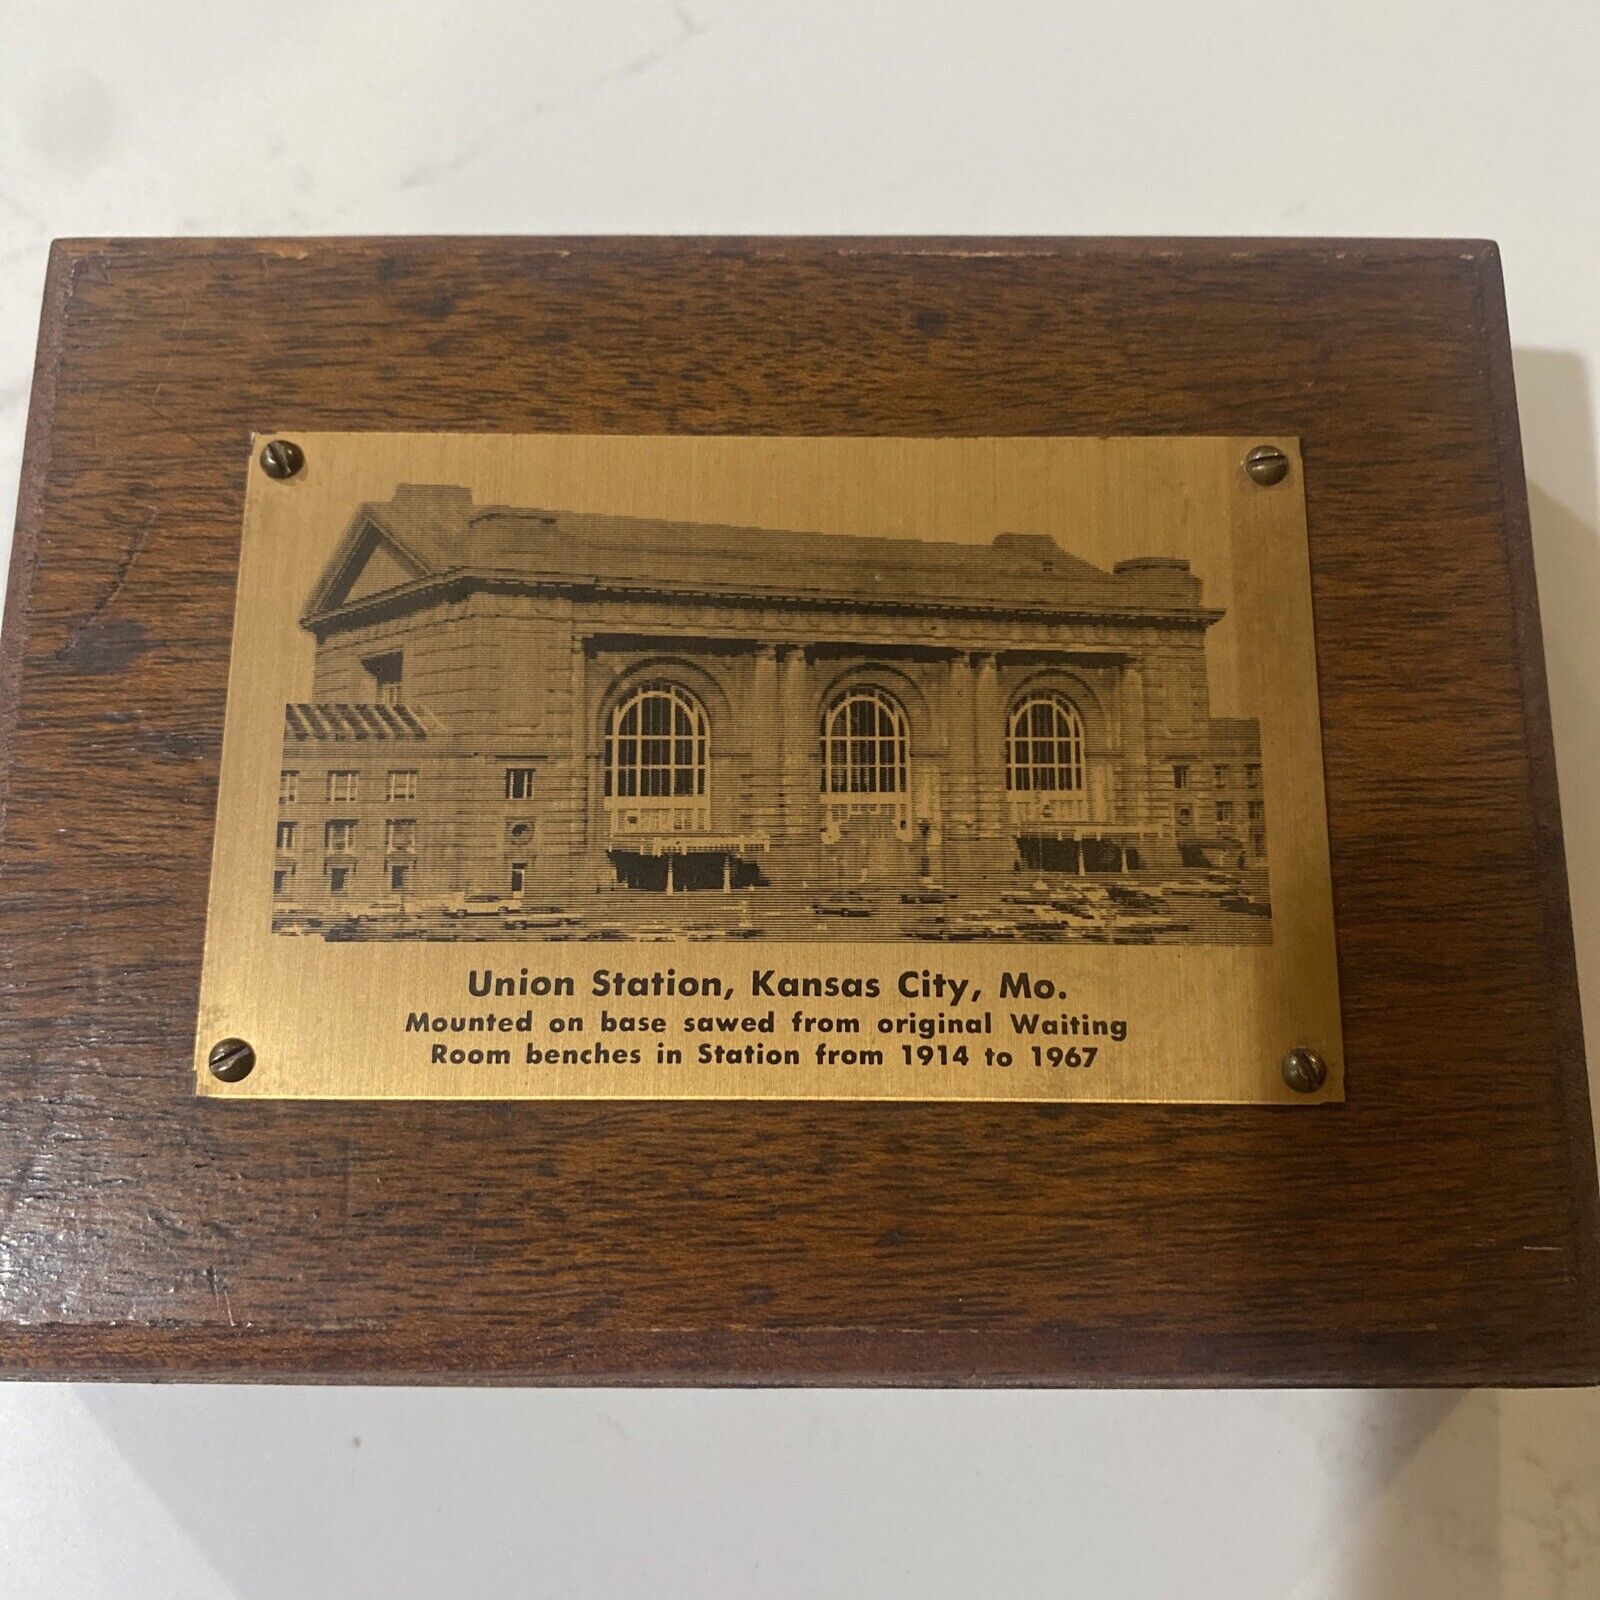 A souvenir piece of wood from Union Station Kansas City Missouri